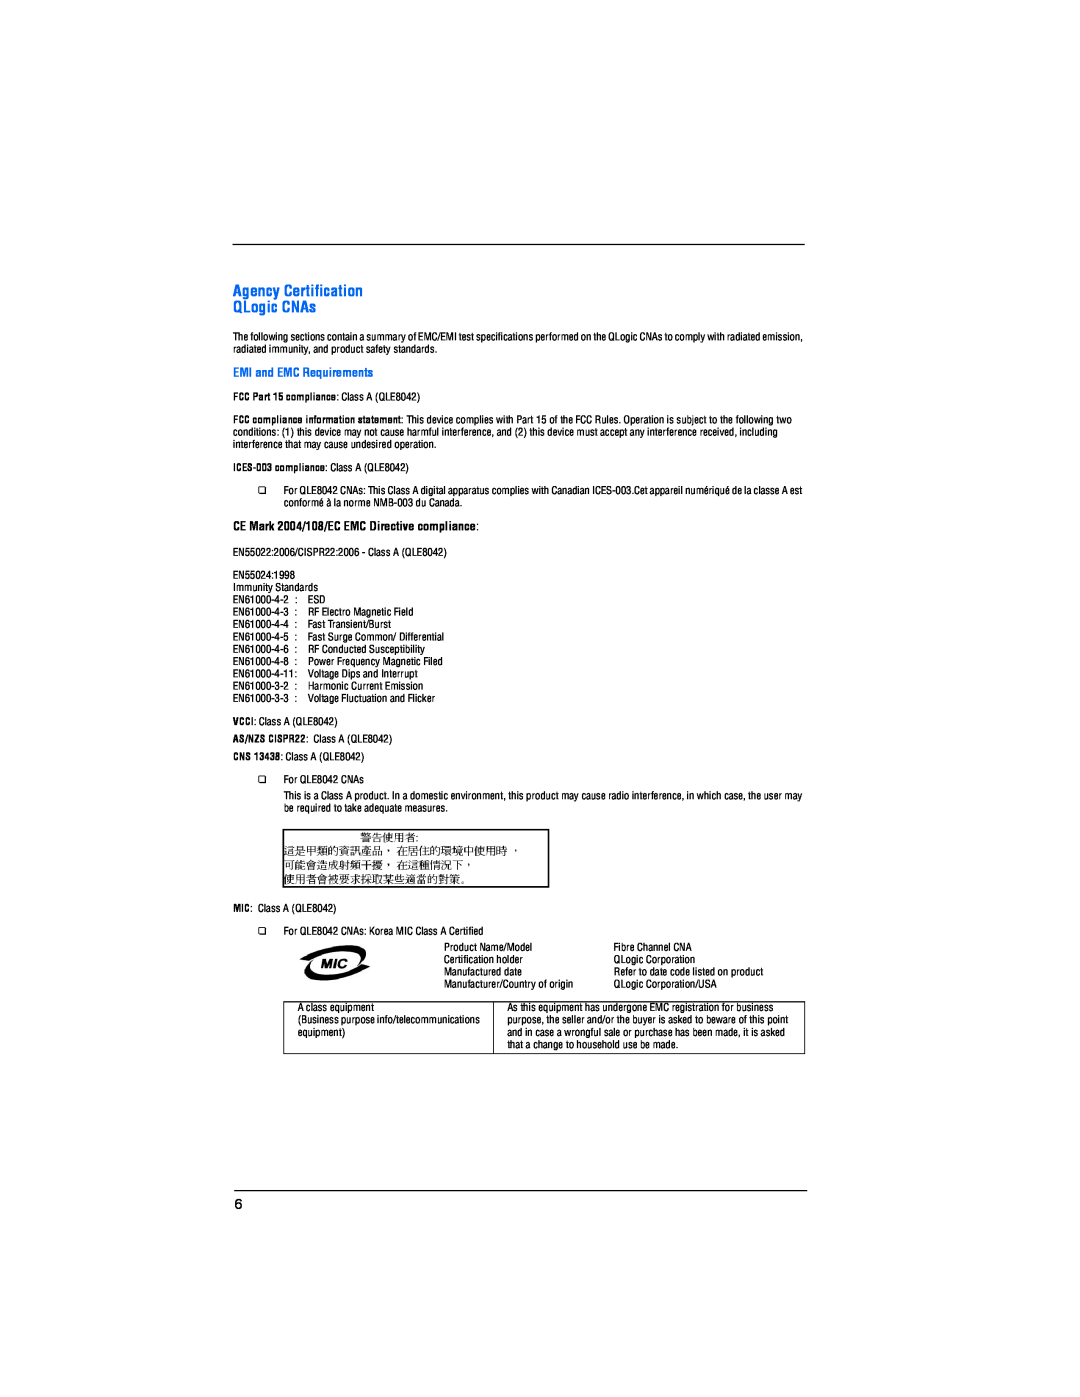 Q-Logic QLE8042 Agency Certification QLogic CNAs, EMI and EMC Requirements, CE Mark 2004/108/EC EMC Directive compliance 